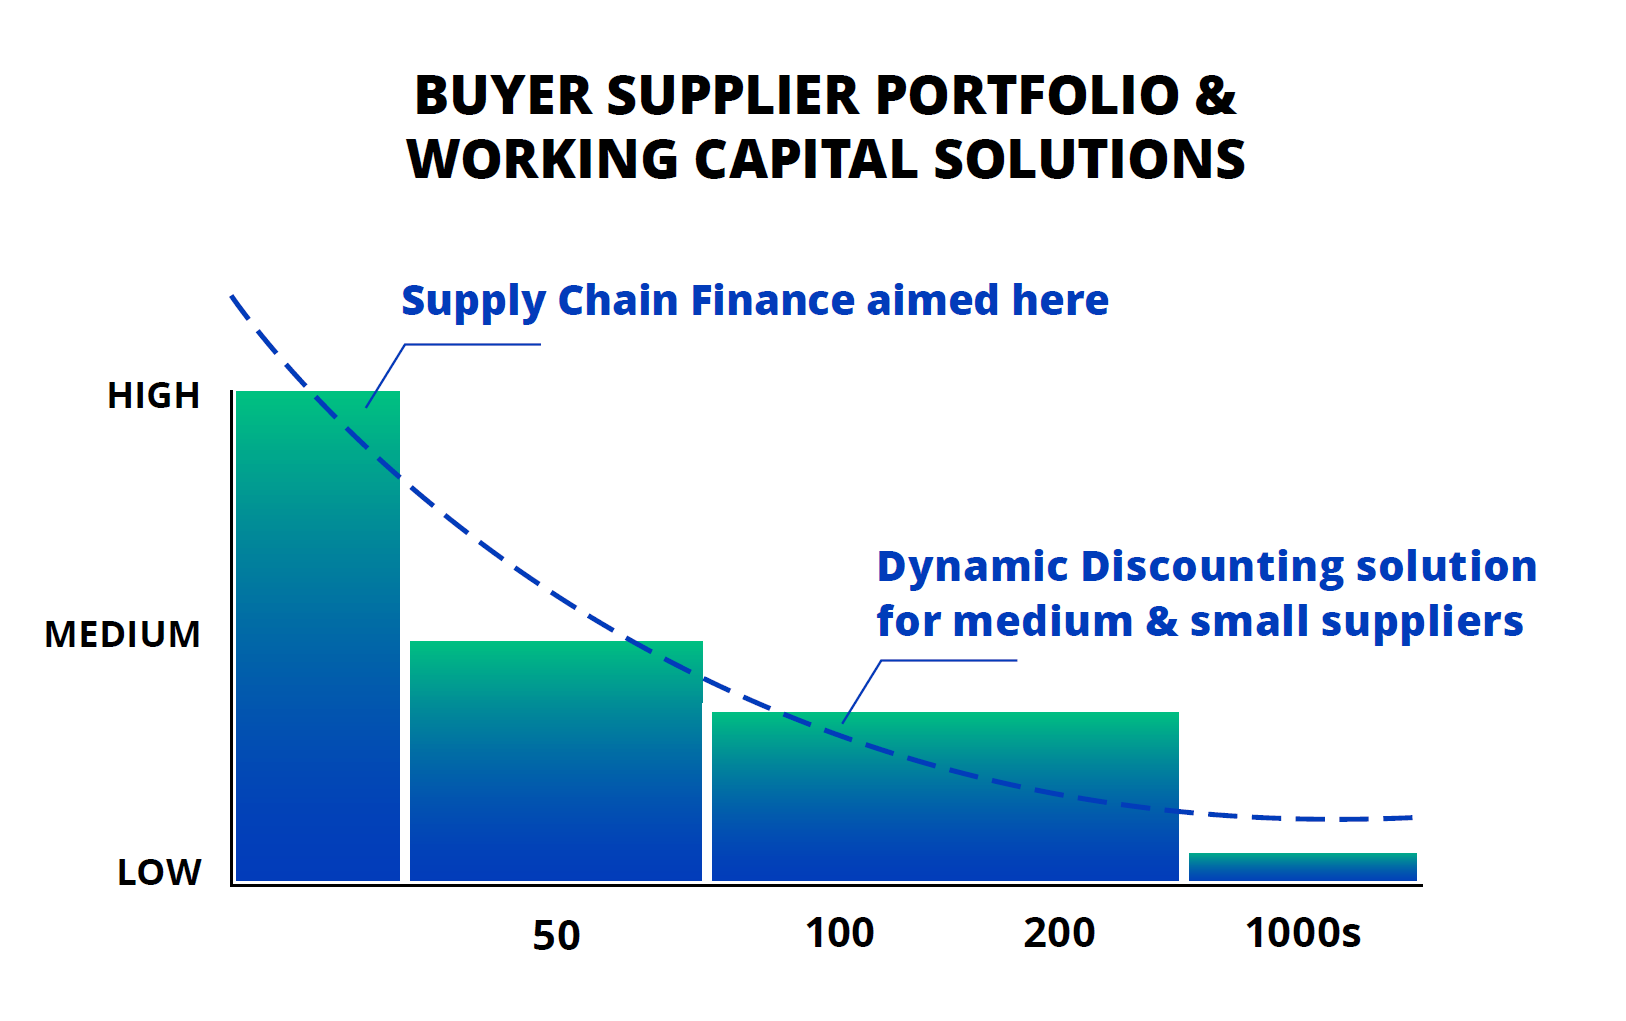 Buyer Supplier Portfolio & Working Capital Solutions